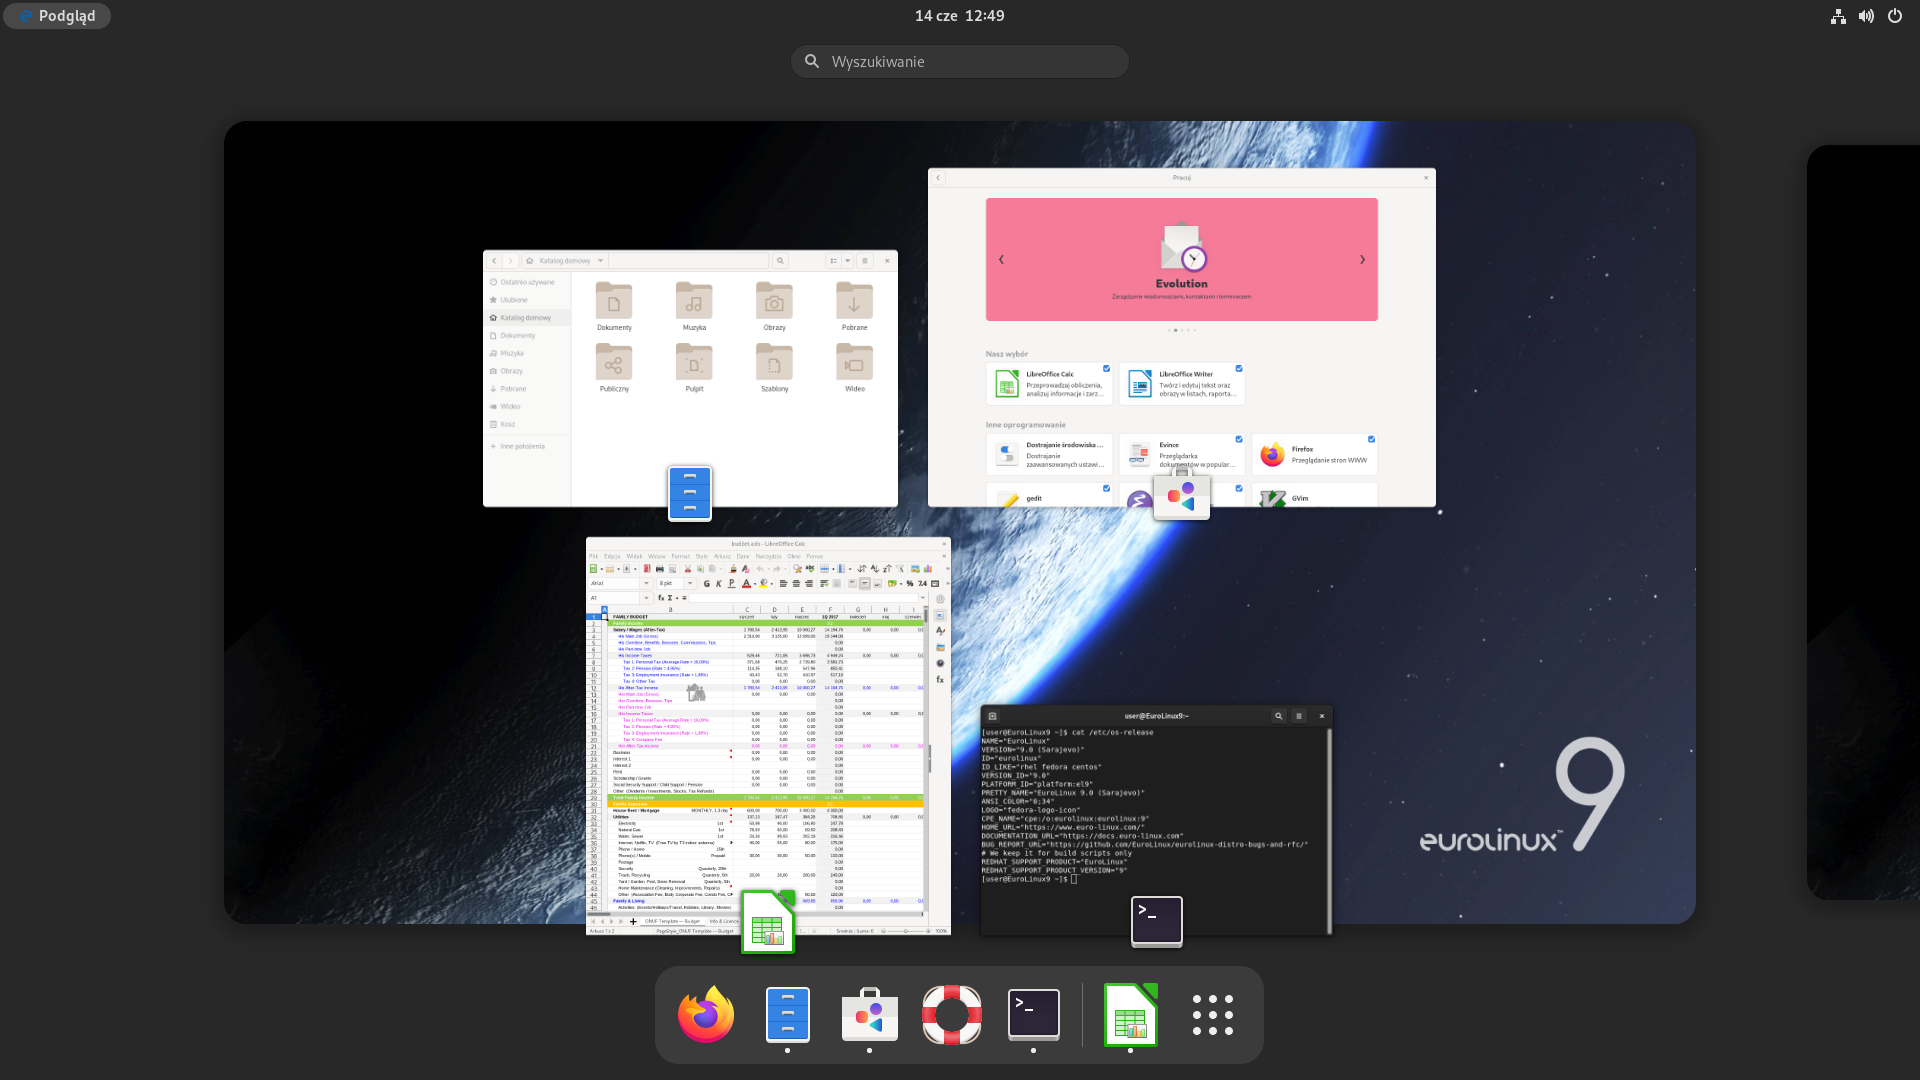 EuroLinux desktop screen